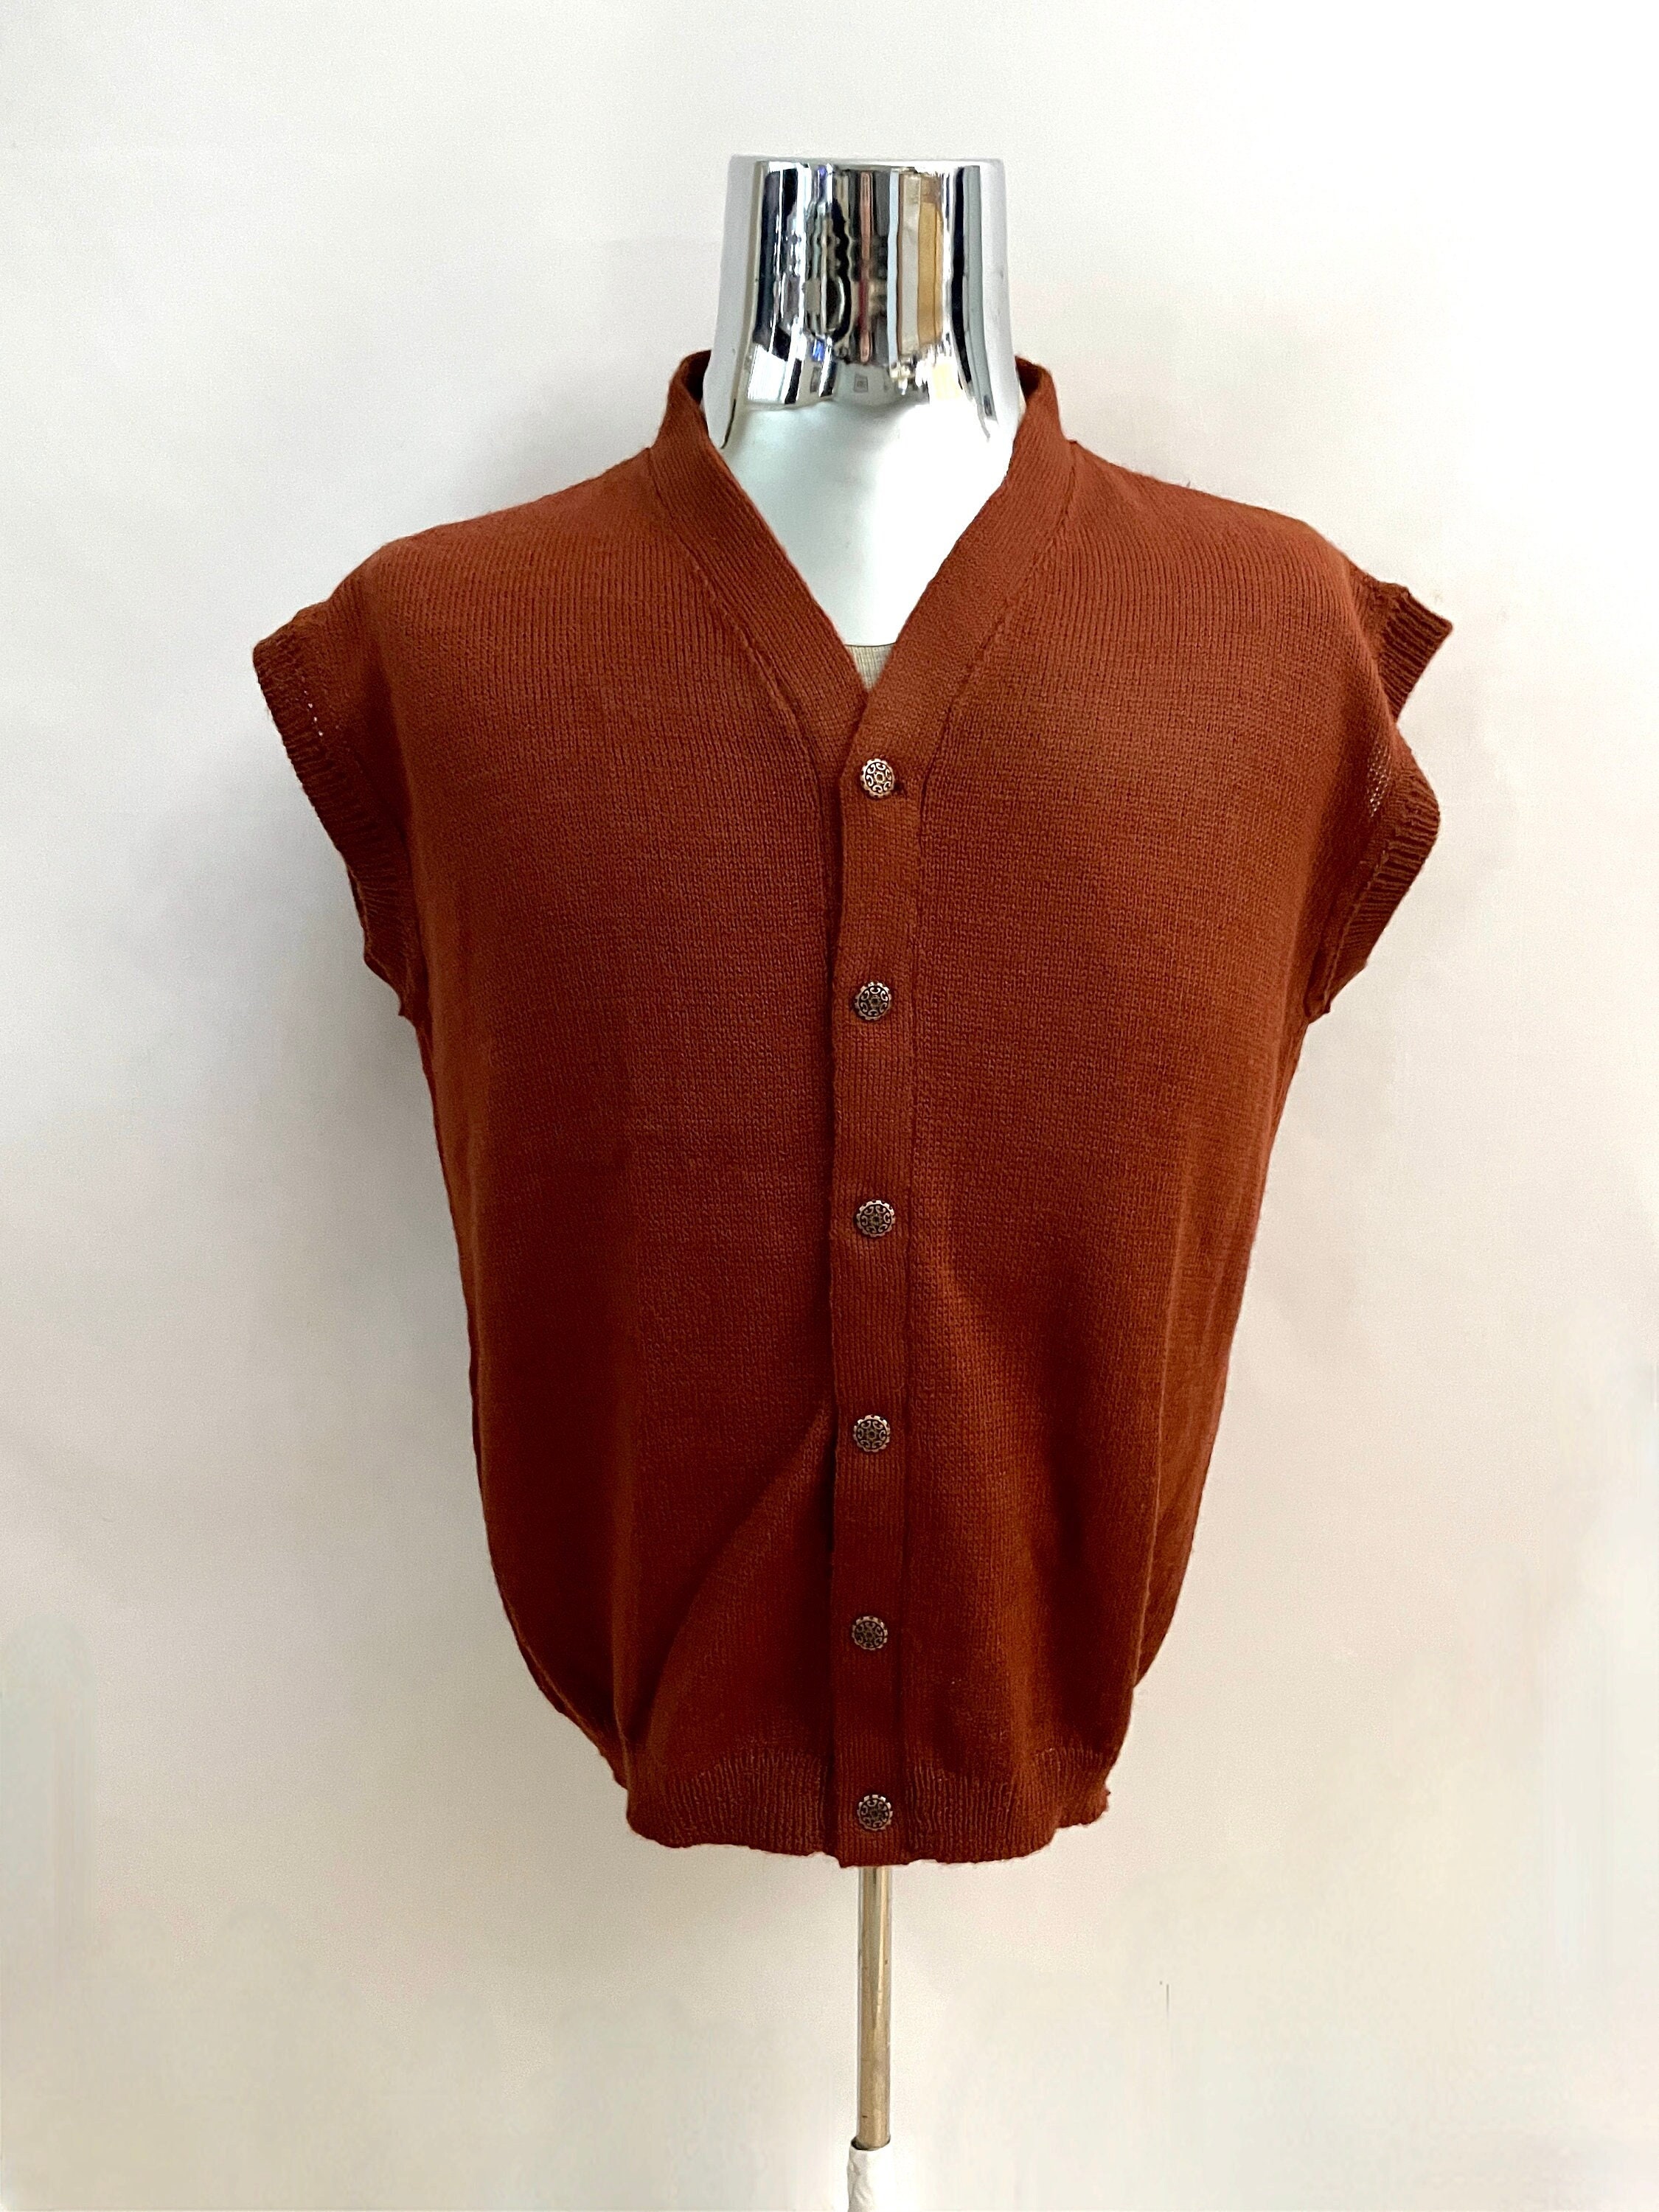 Buy Sweater Vest 70s Online In India -  India